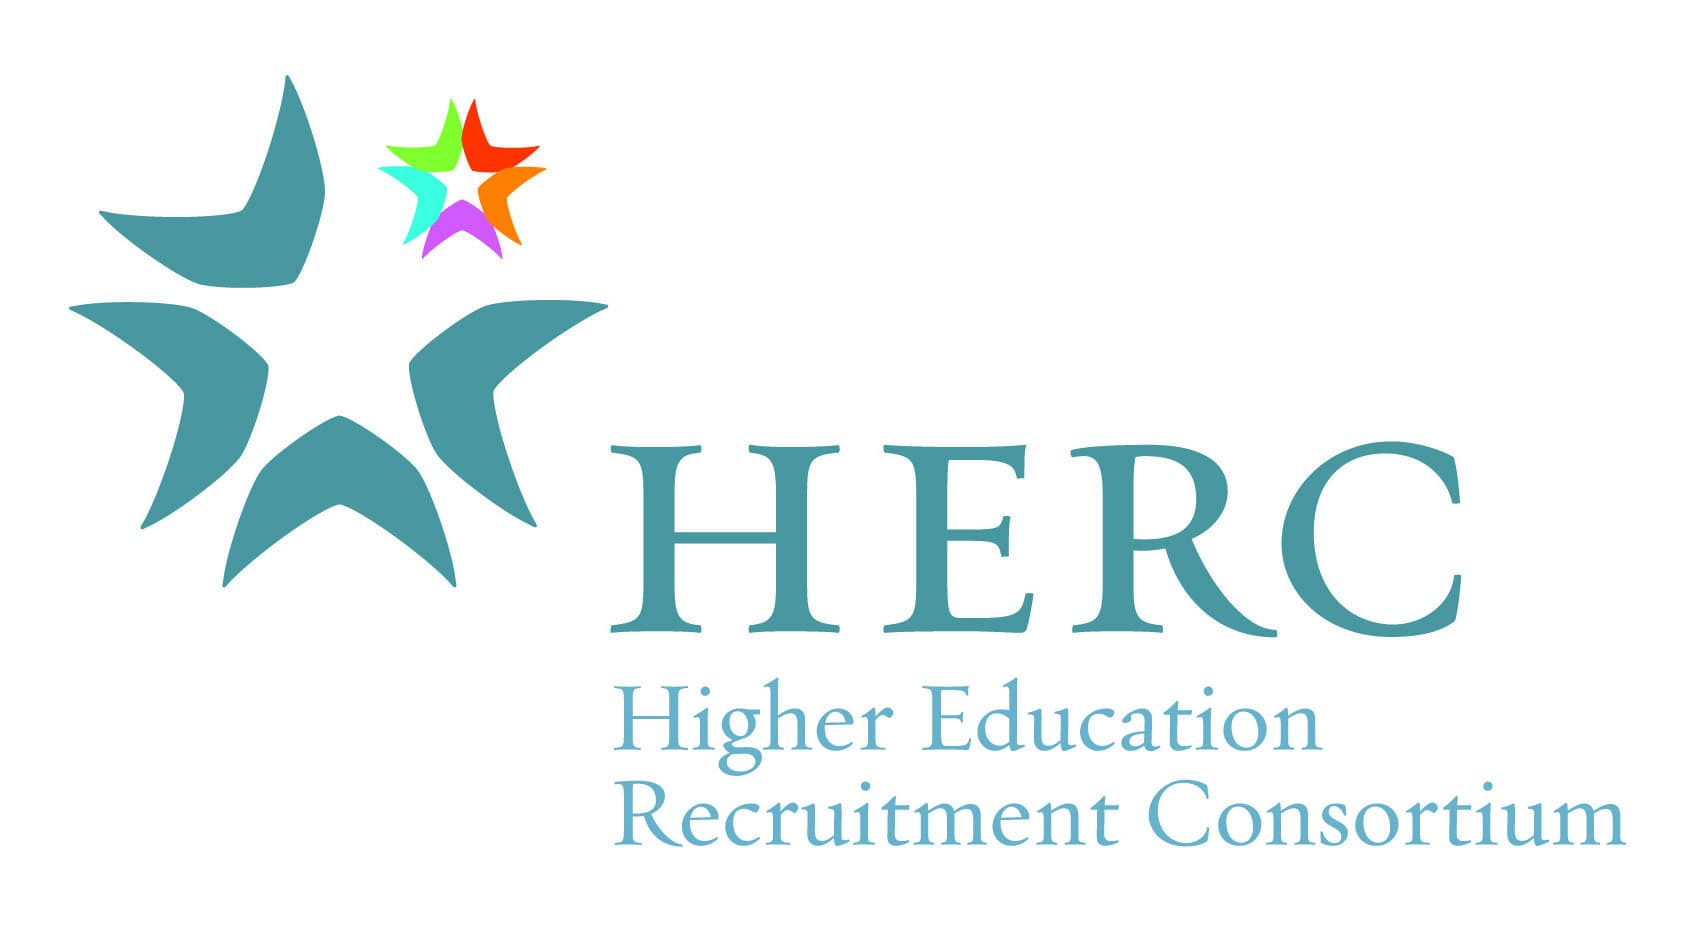 Higher Education Recruitment Consortium (HERC) logo